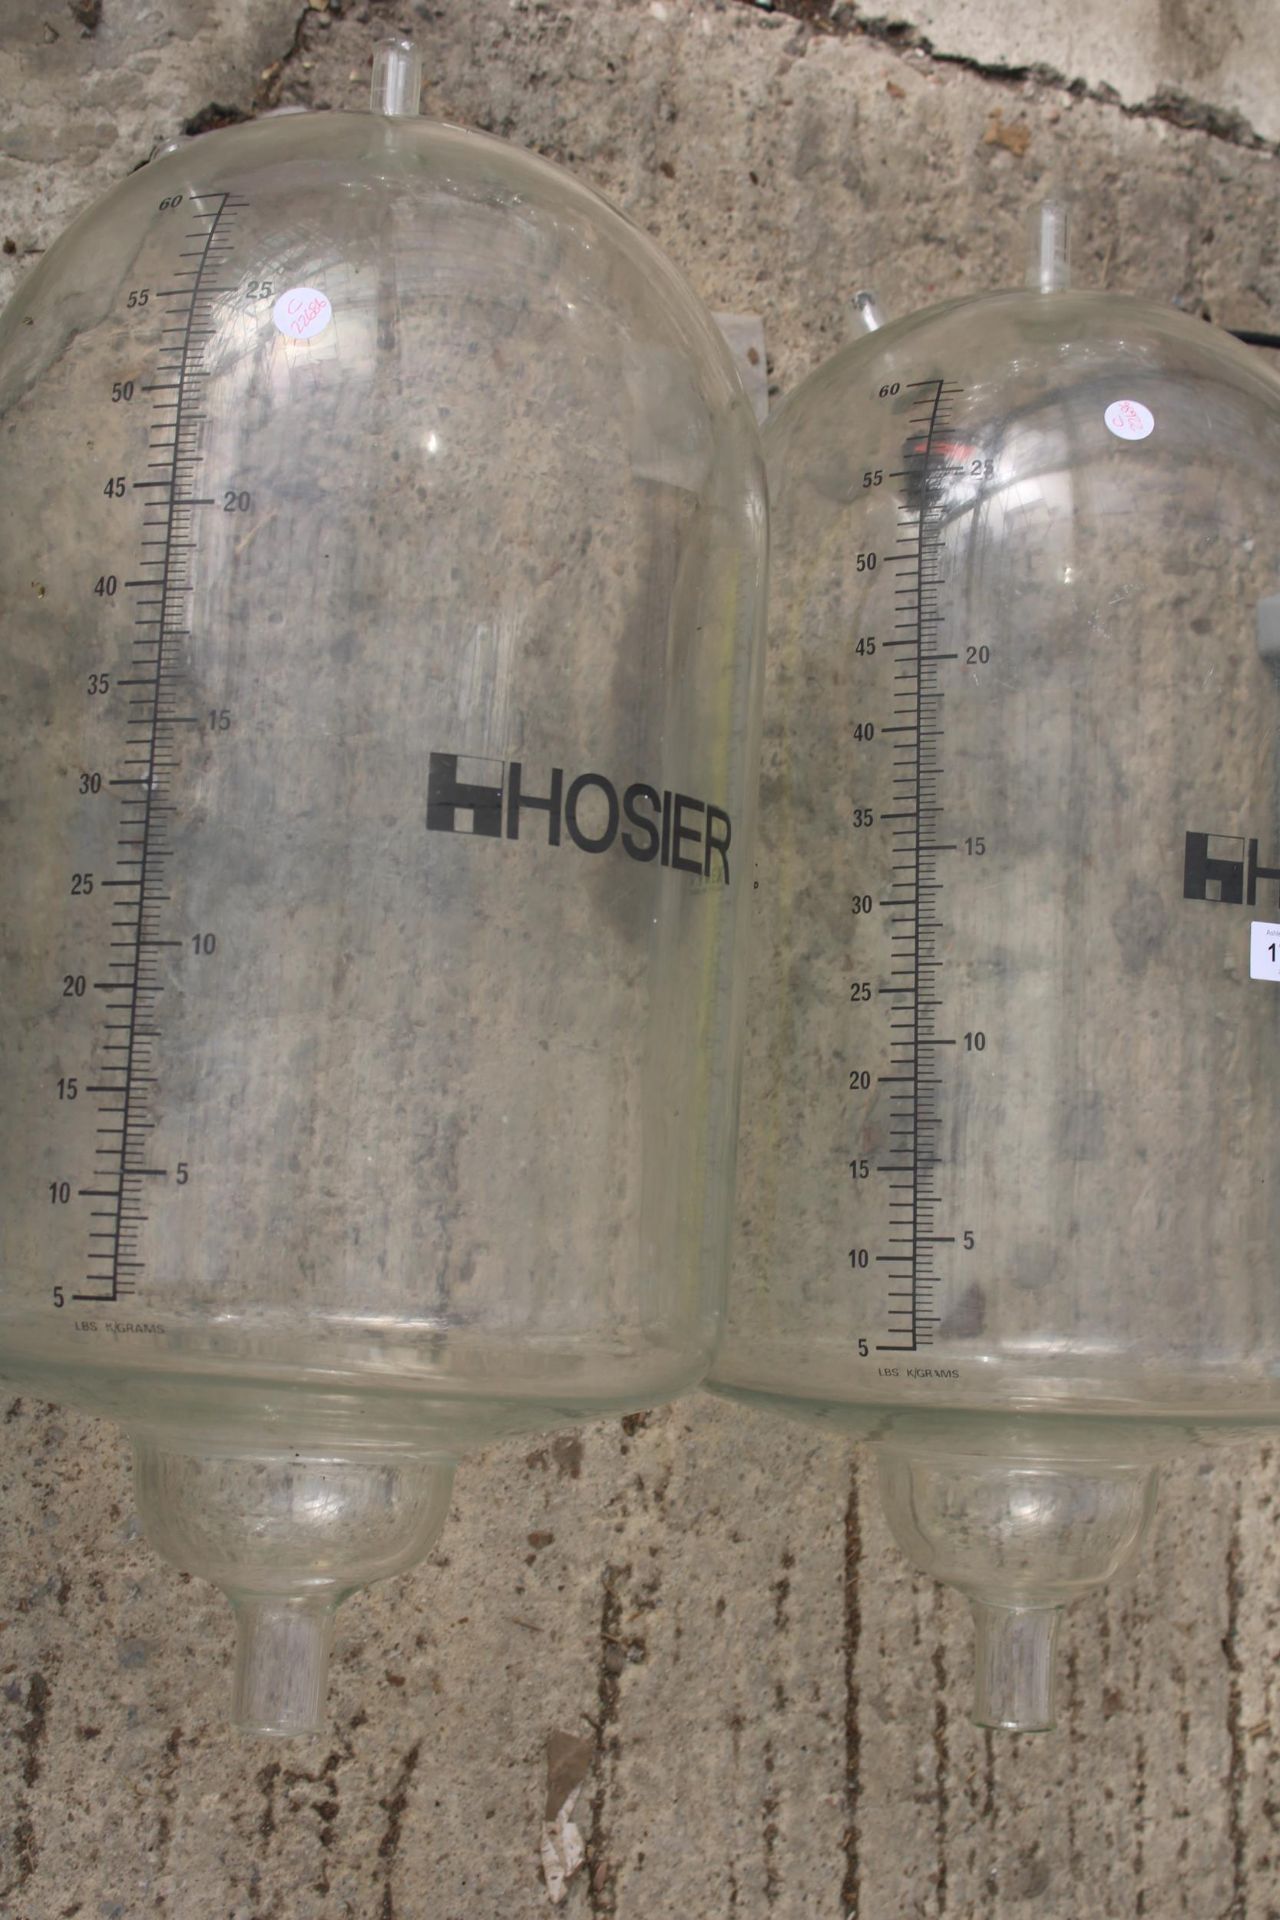 TWO GLASS HOSIER MILK RECIEVER JARS - Image 3 of 3